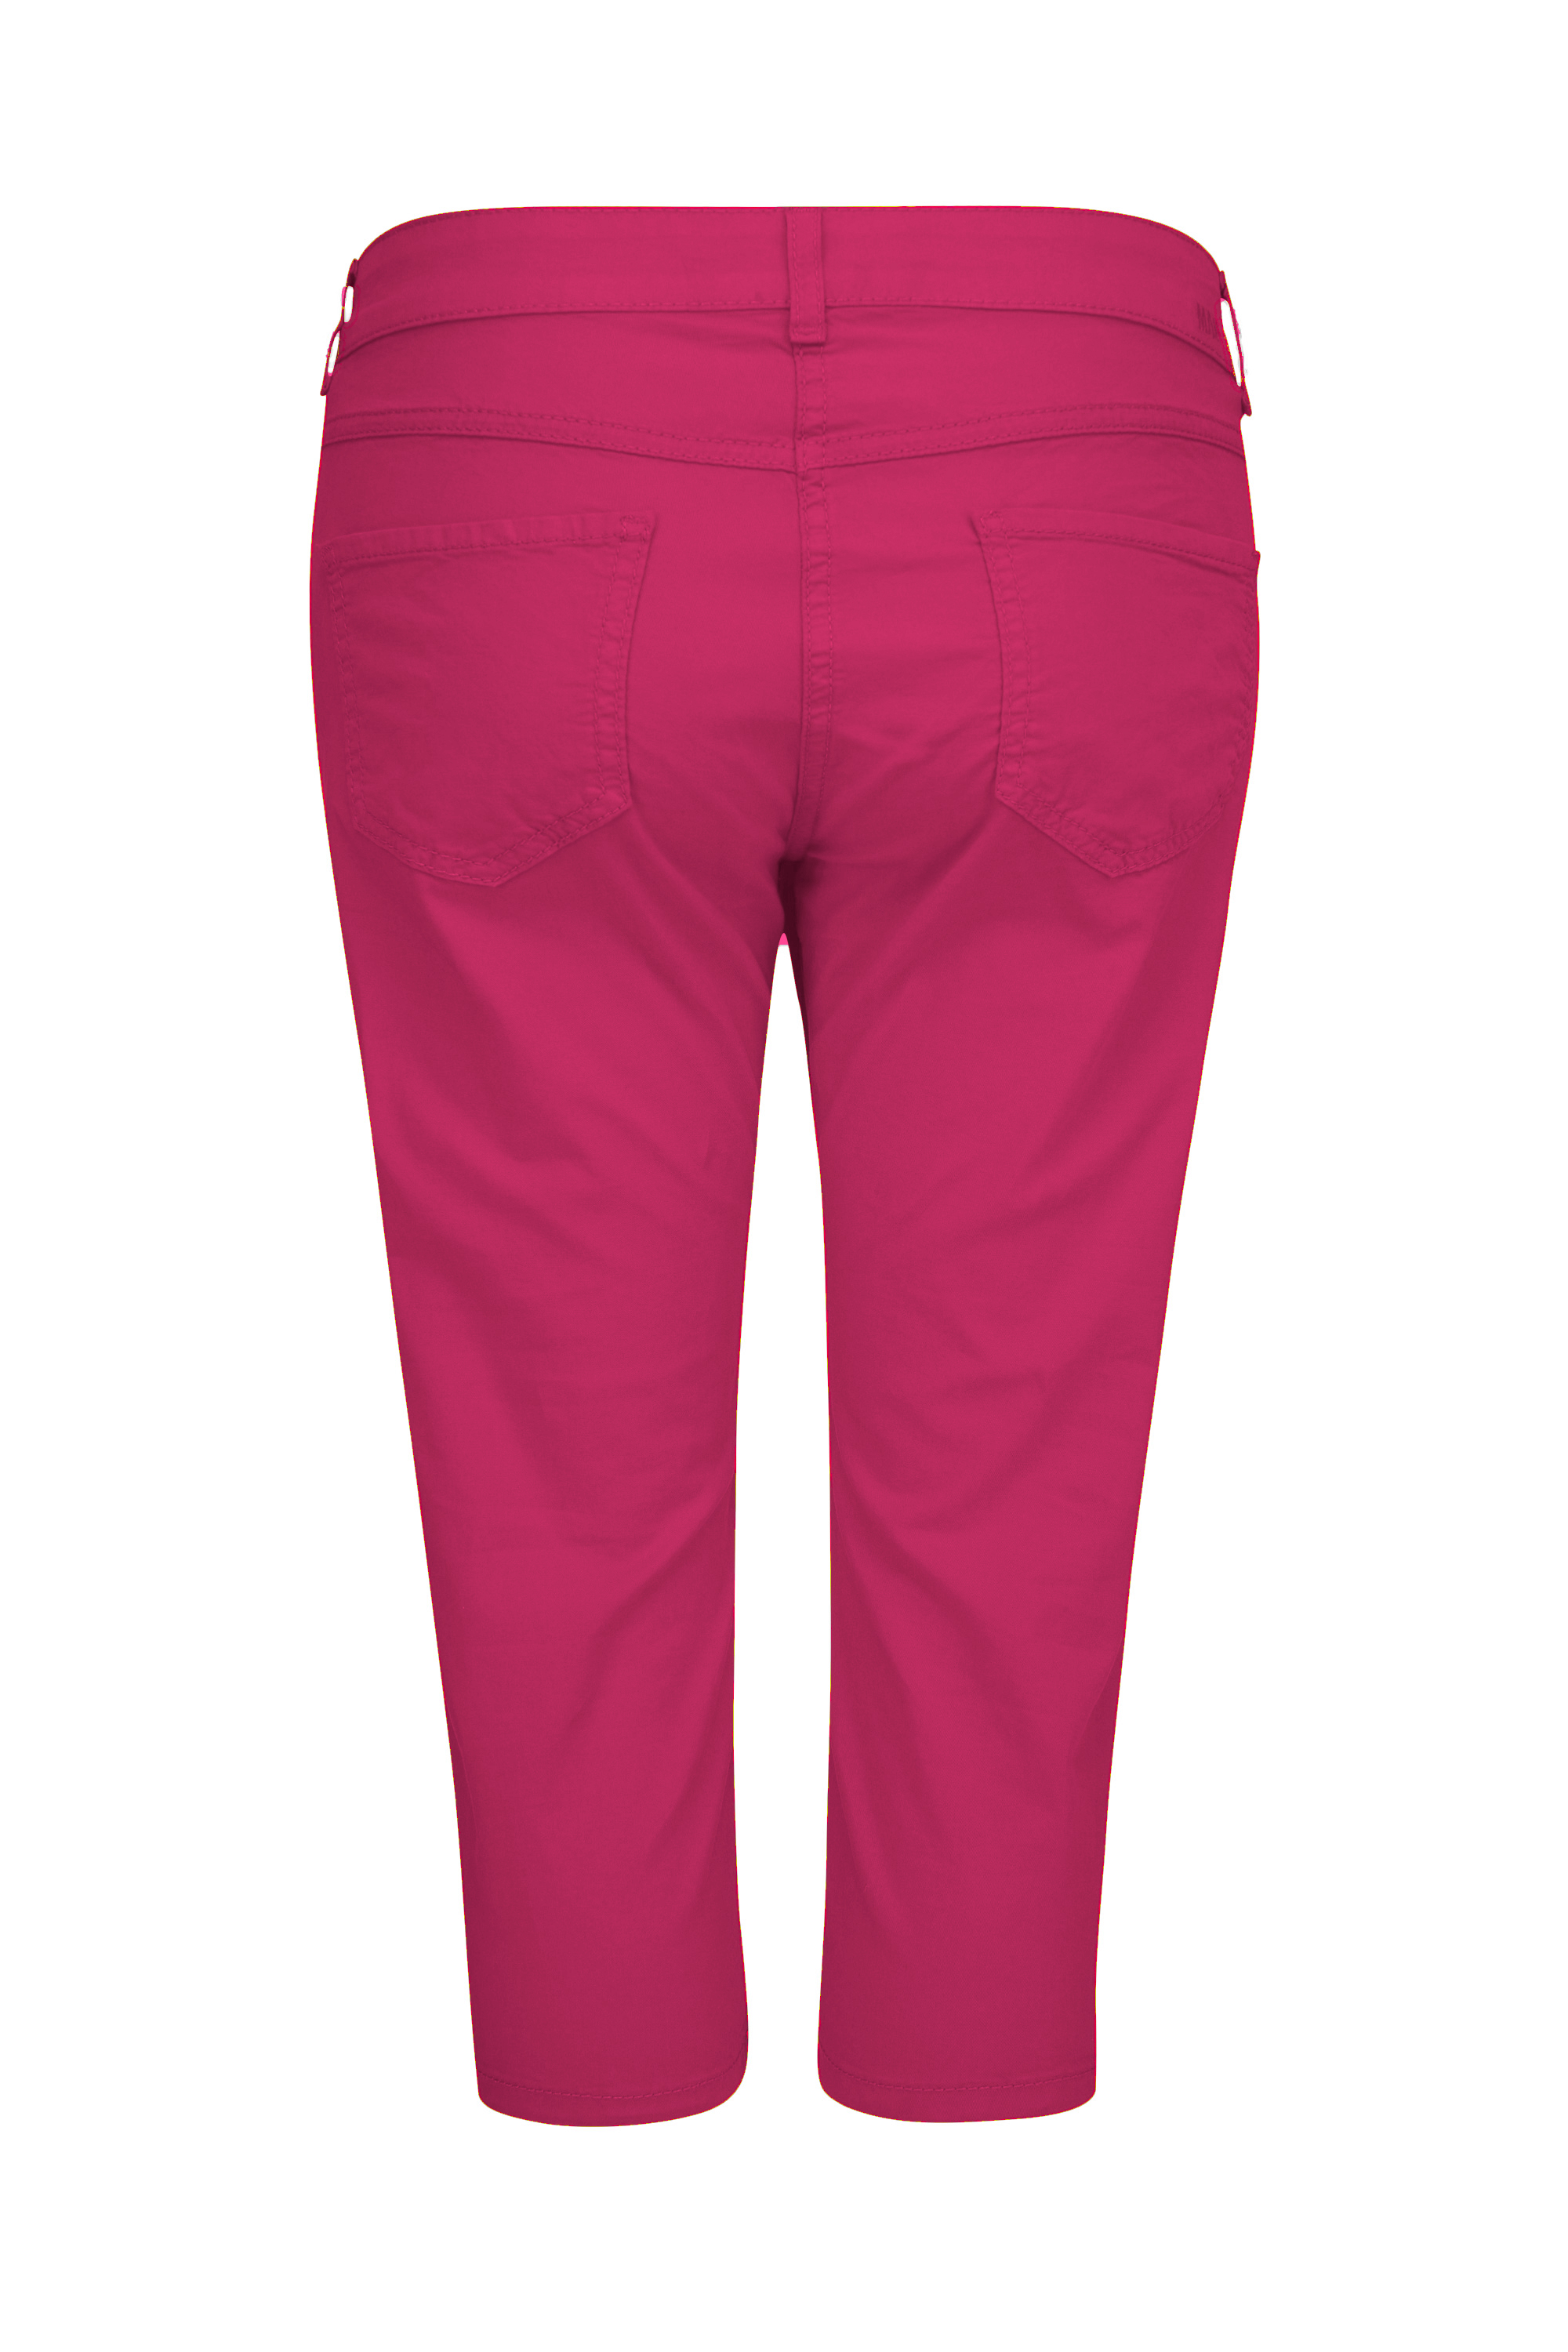 MAC CAPRI summer clean pink 5917-00-0413L-445R | Capri | Jeans | Damen Jeans | Jeans-Manufaktur